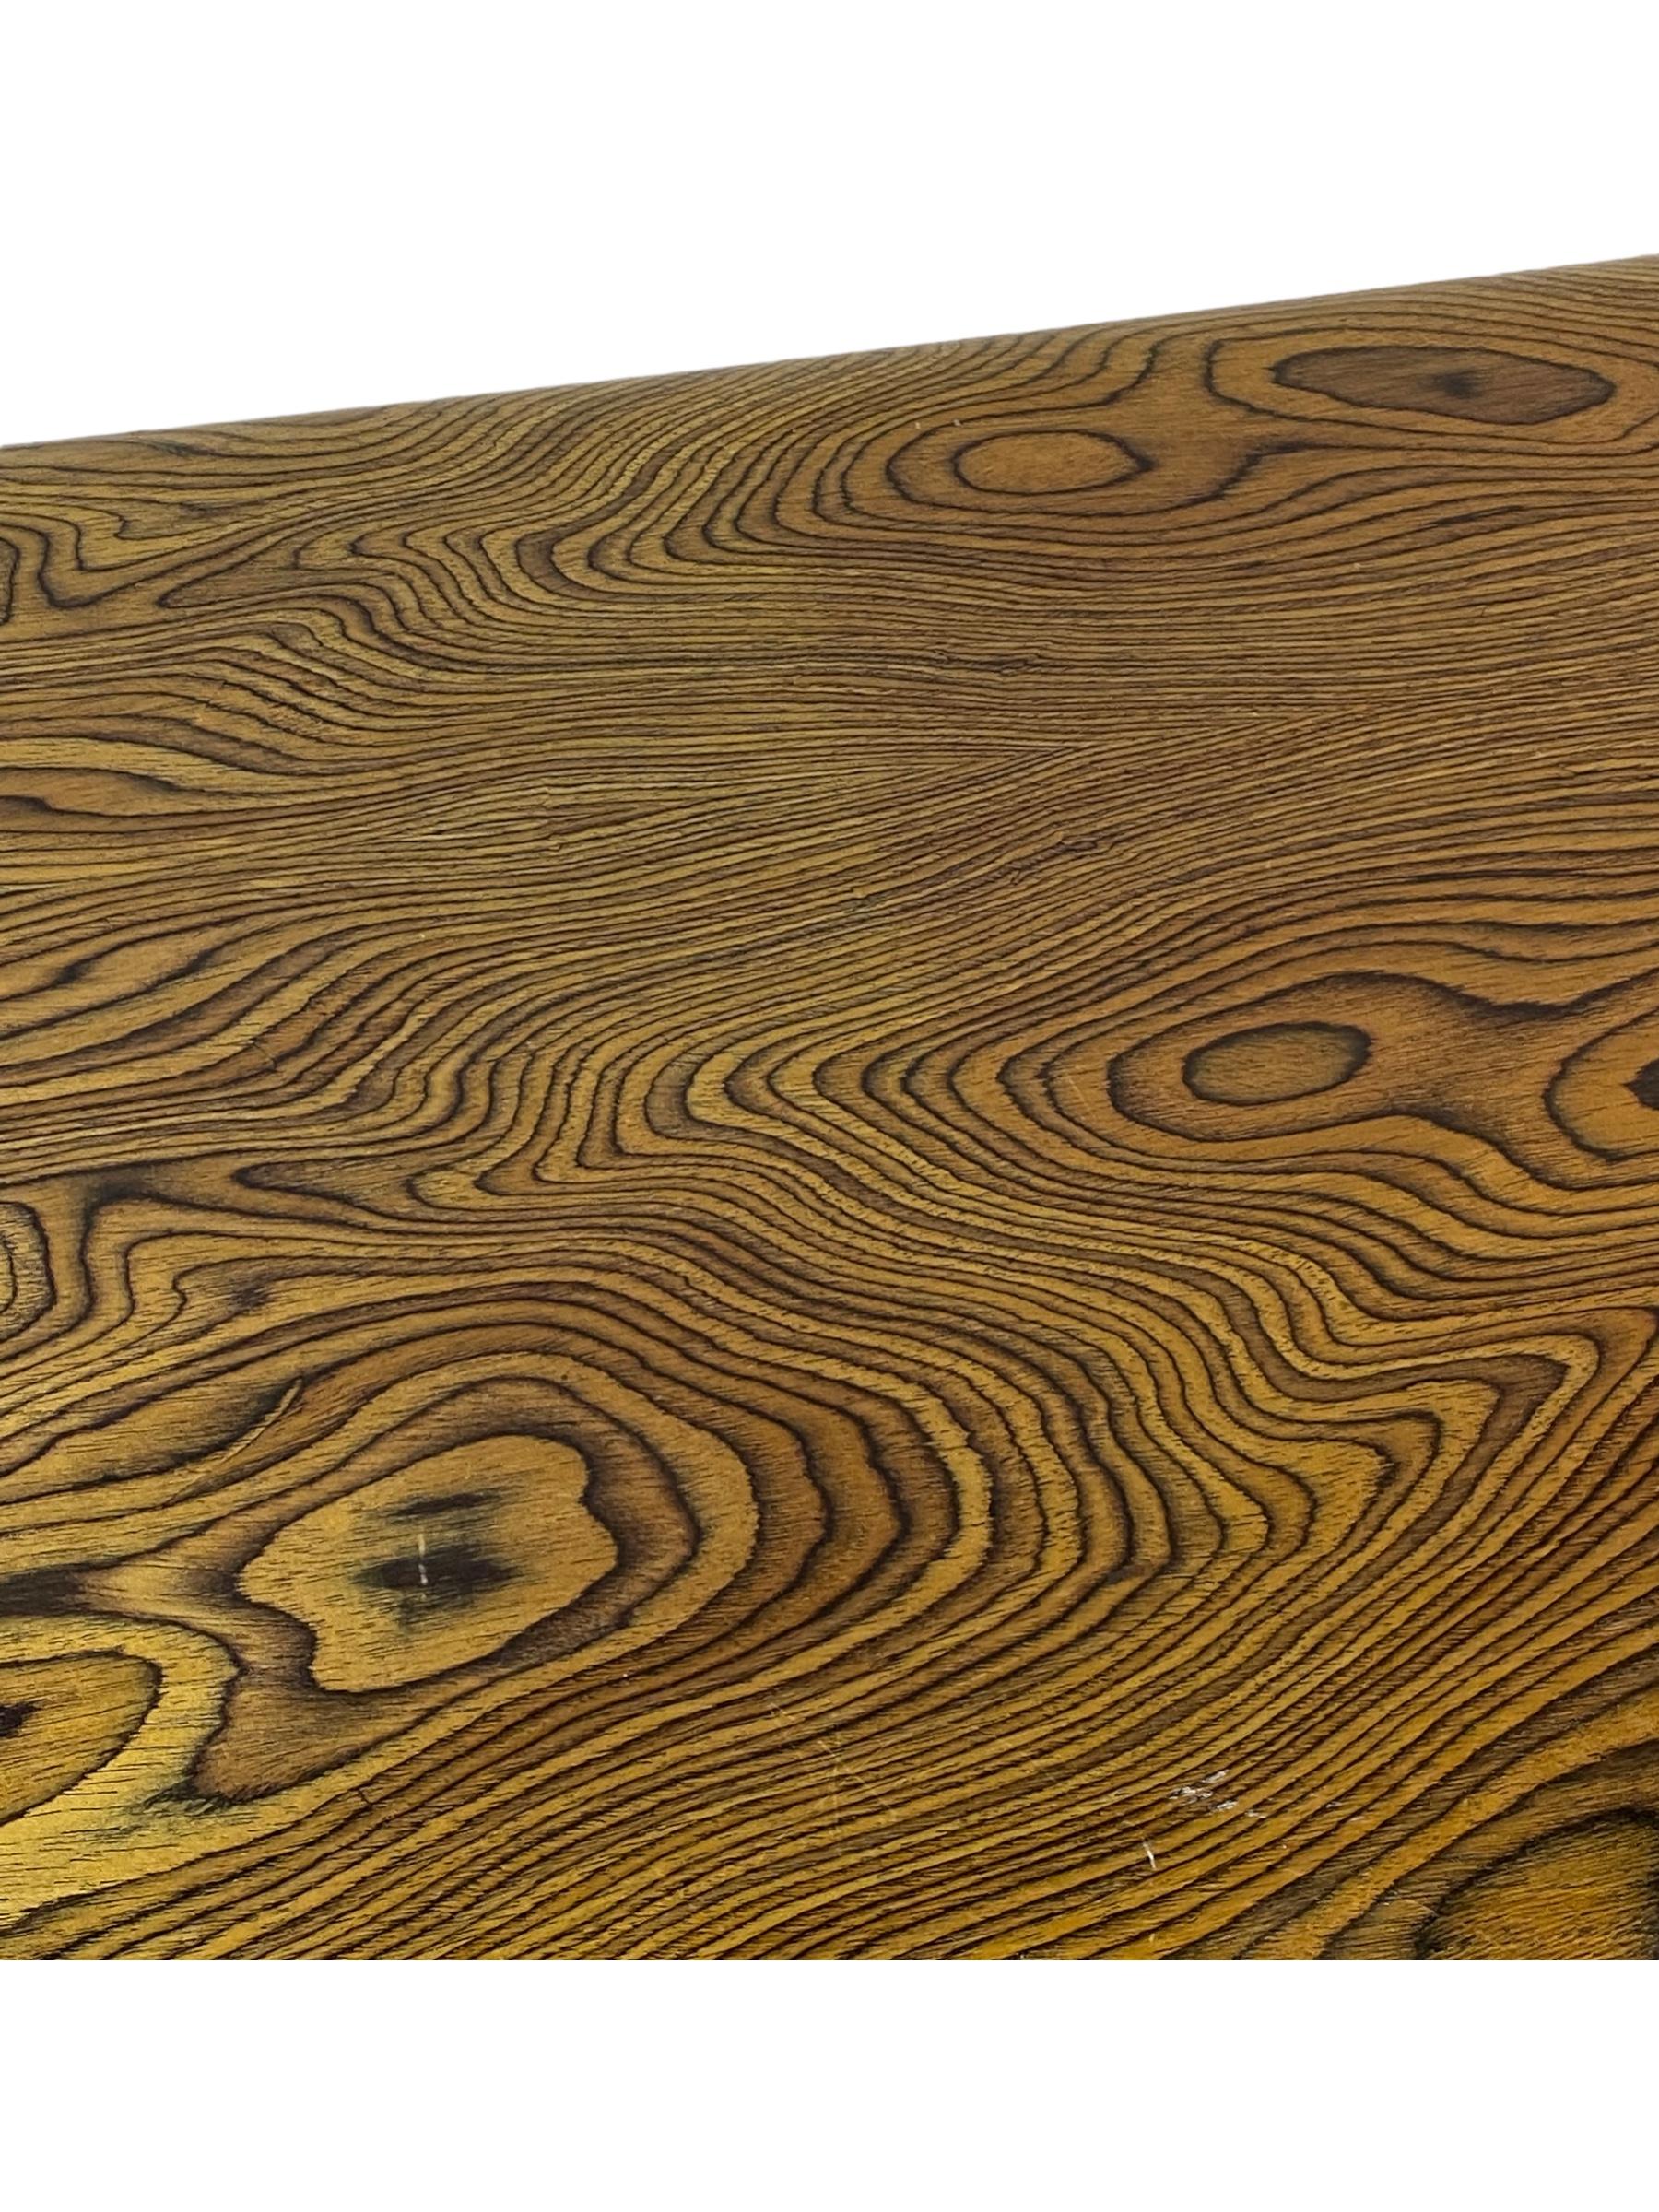 Herman Miller Zebra Wood and Chrome Desk Designed by Peter Protzman 4